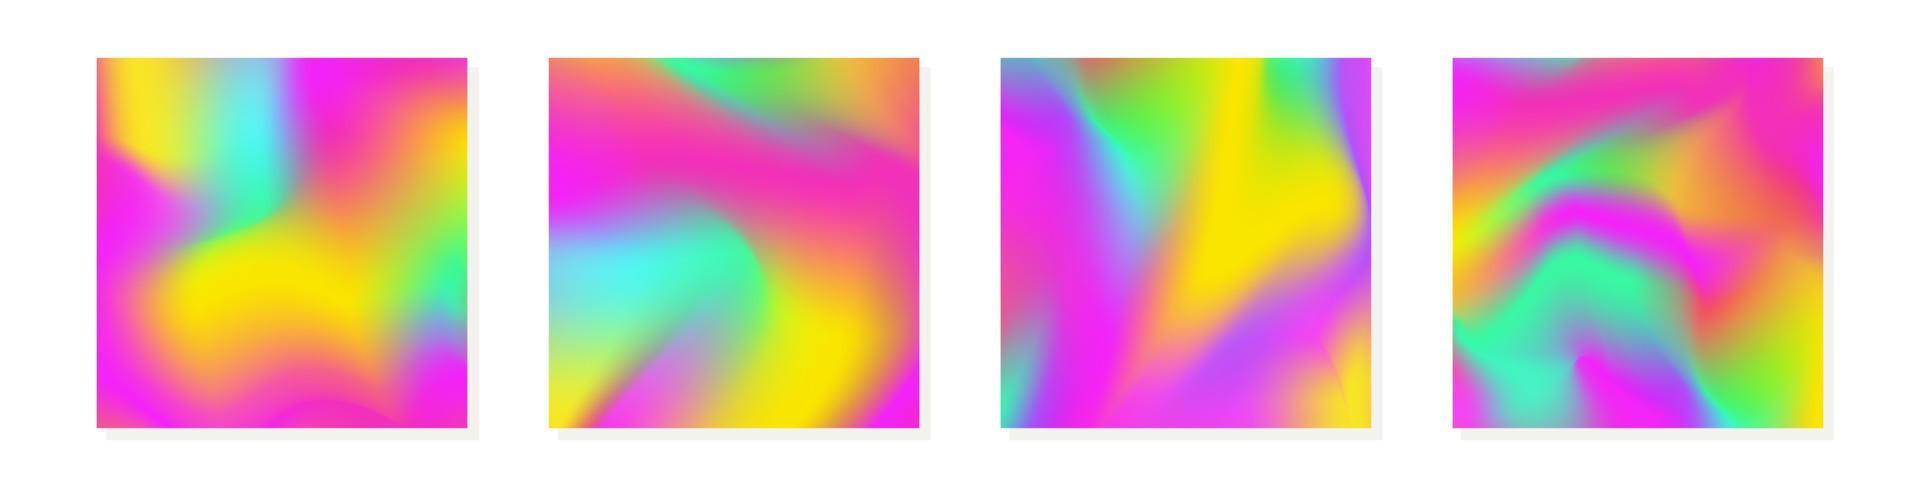 Holographie-Vektor-Cover-Design-Hintergrund vektor